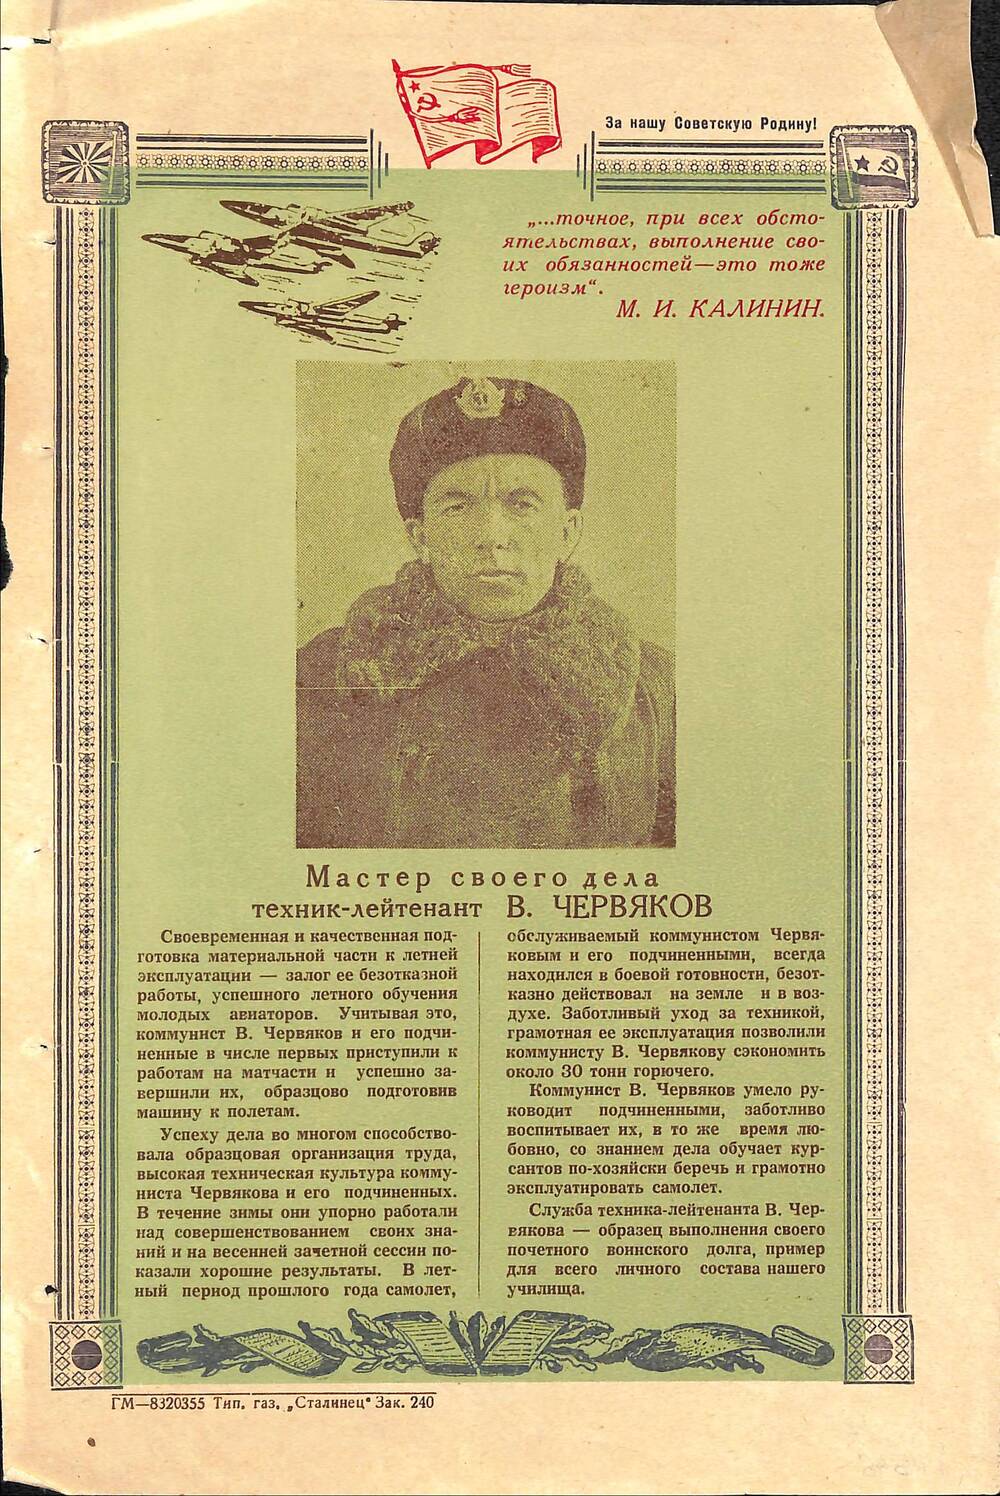 Листовка о технике-лейтенанте В. Червякове